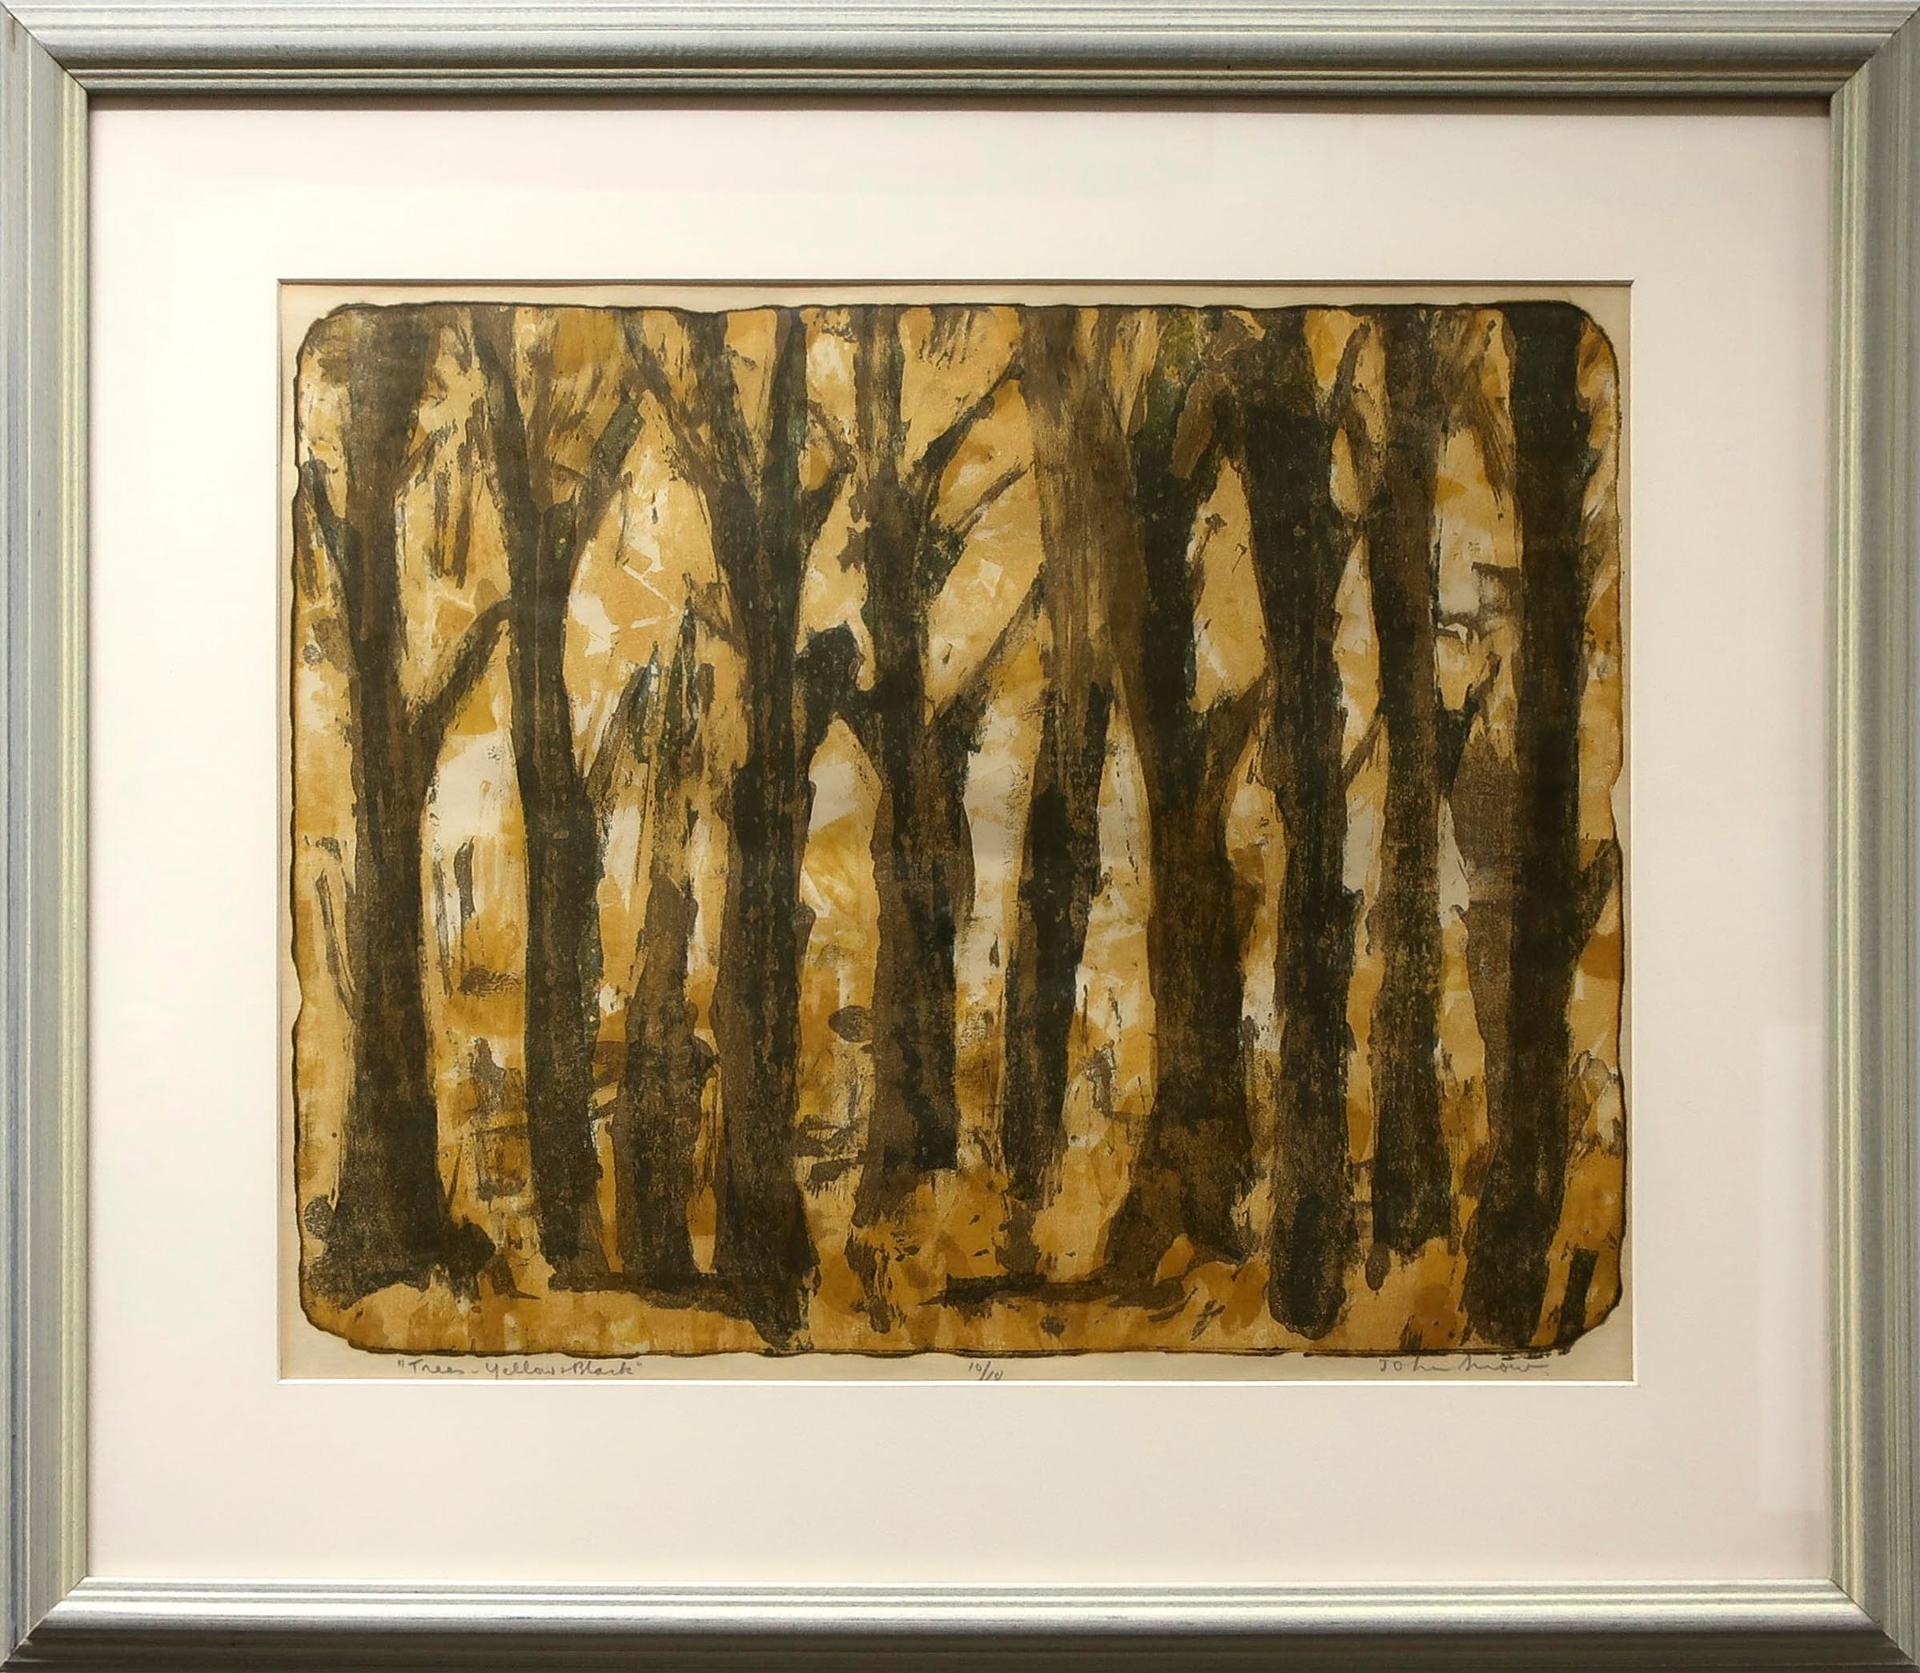 John Harold Thomas Snow (1911-2004) - Trees - Yellow & Black